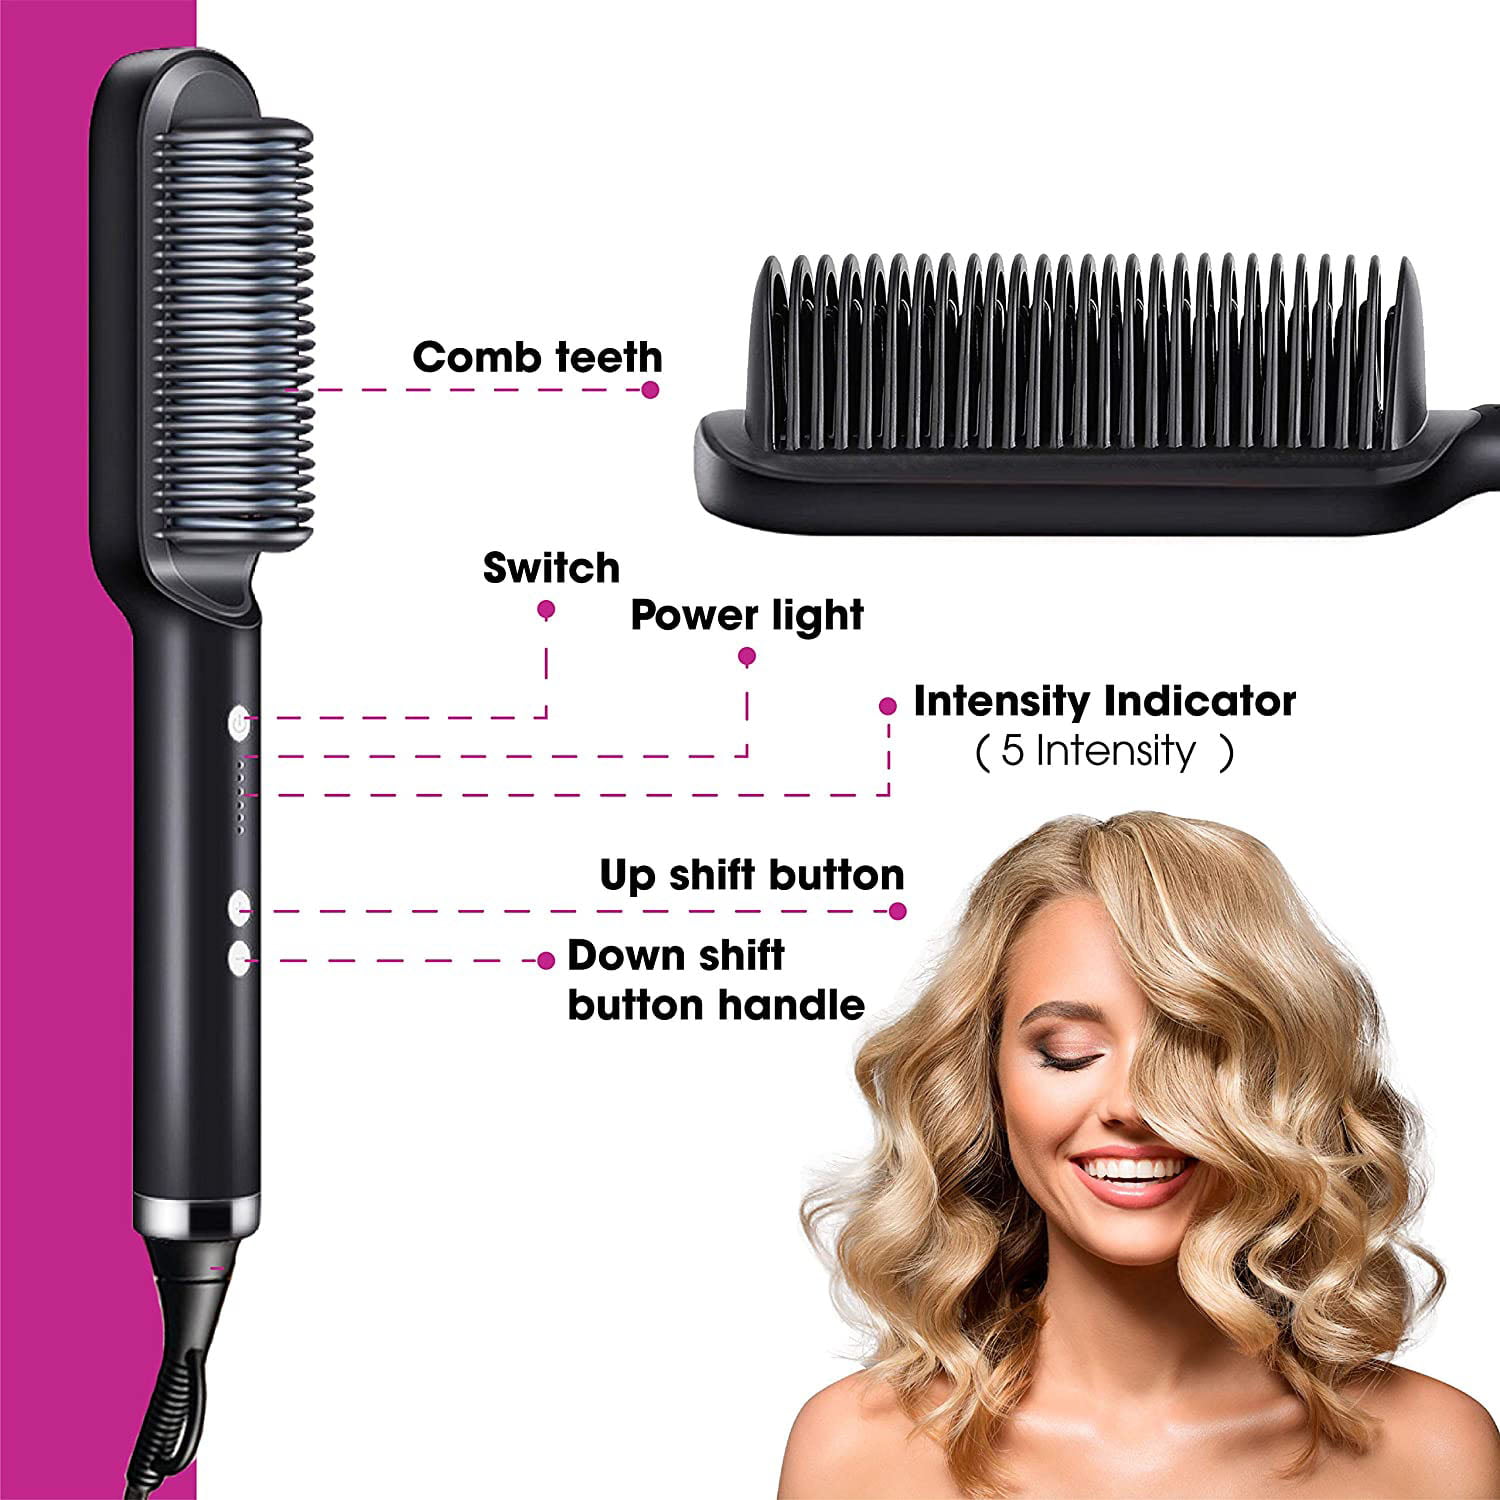 Hair Straightener Brush, Ceramic Hair Straightening Hot Comb, Fast Heating  Up, 5 Adjustable Temp, Anti-Scald, Auto off, Hair Straightener for Home  Travel Salon 